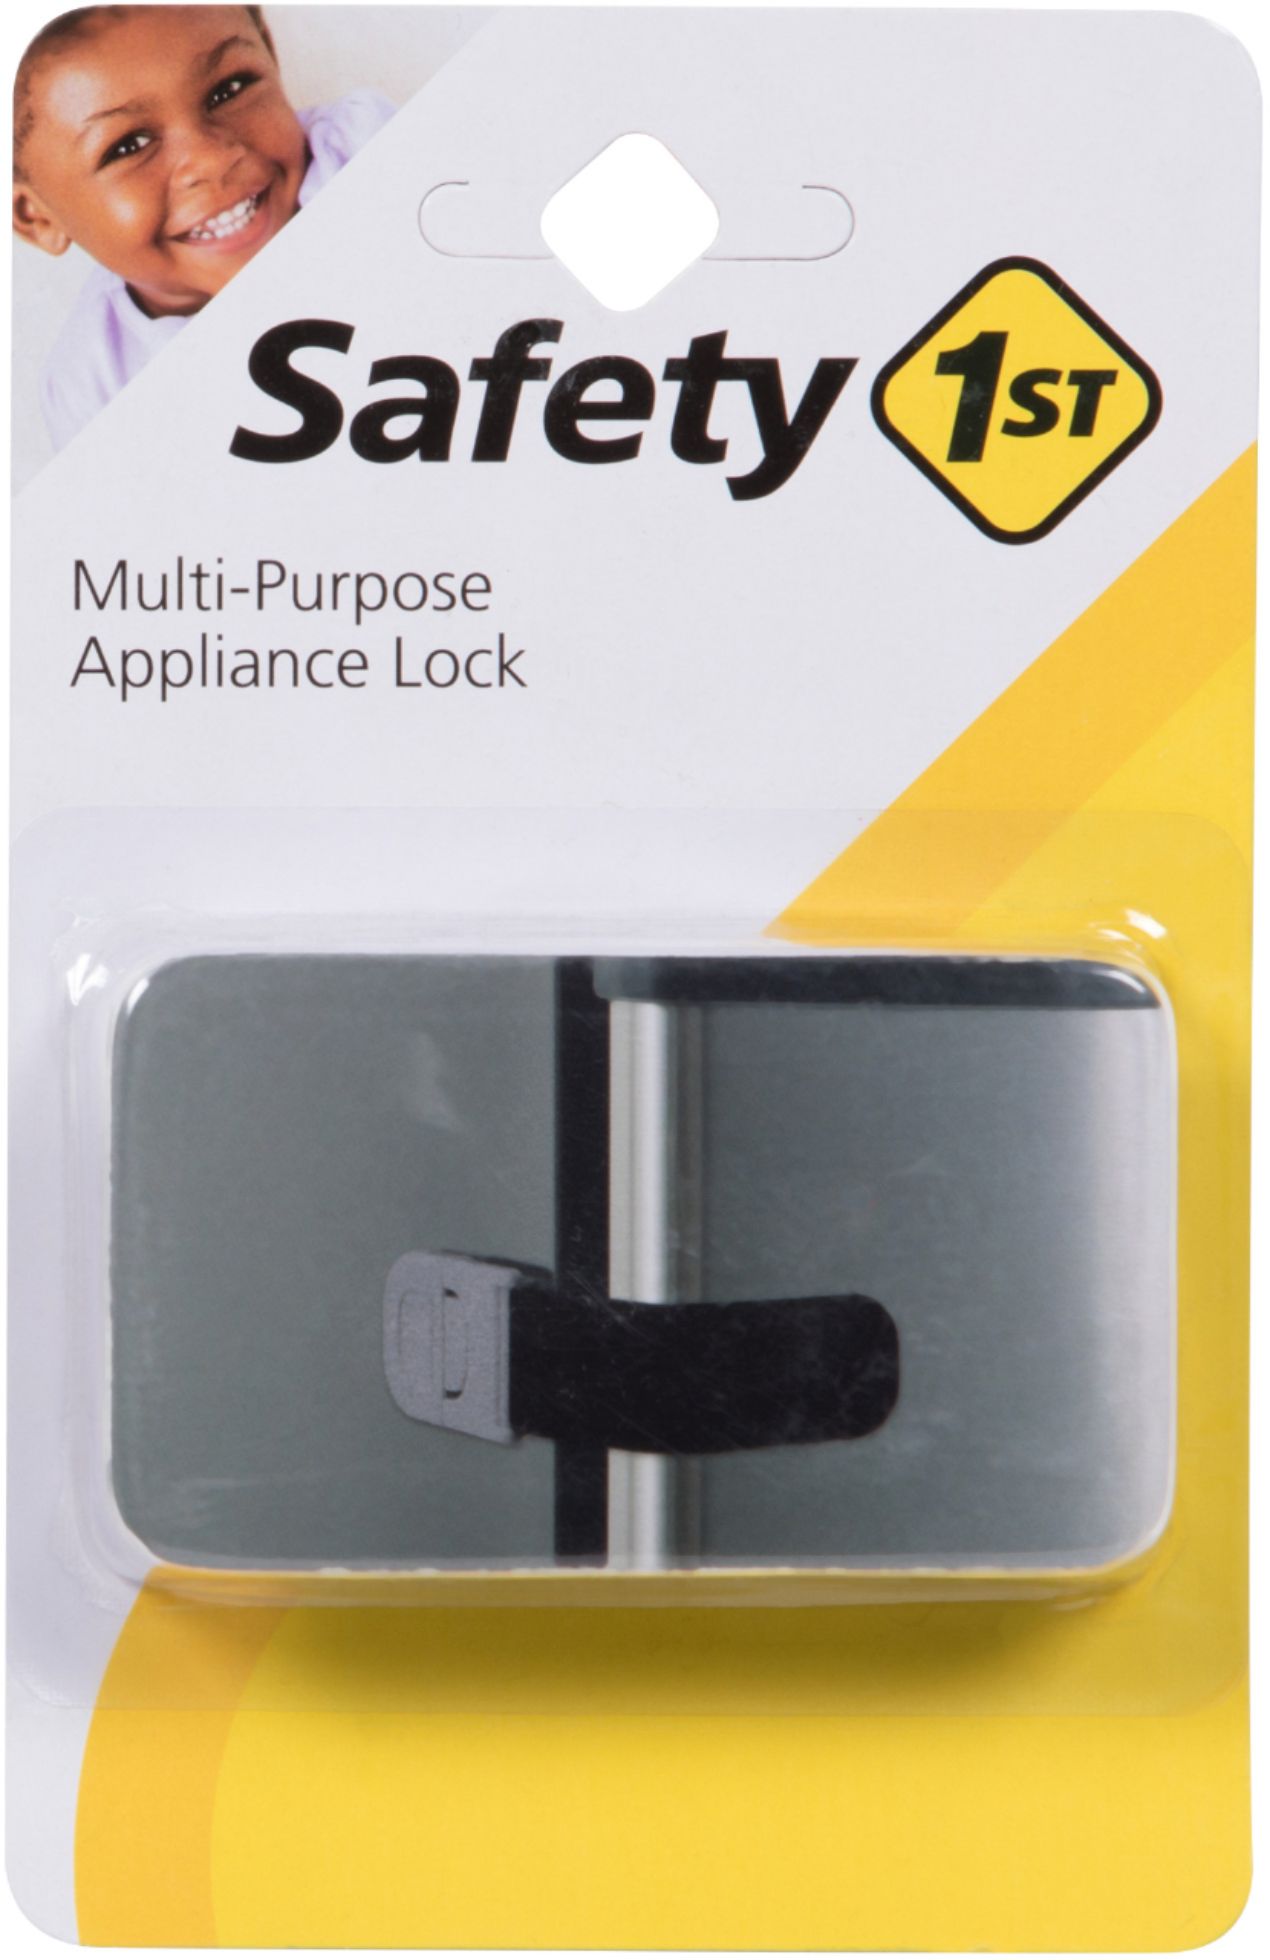 Safety 1st - Multi-Purpose Appliance Lock